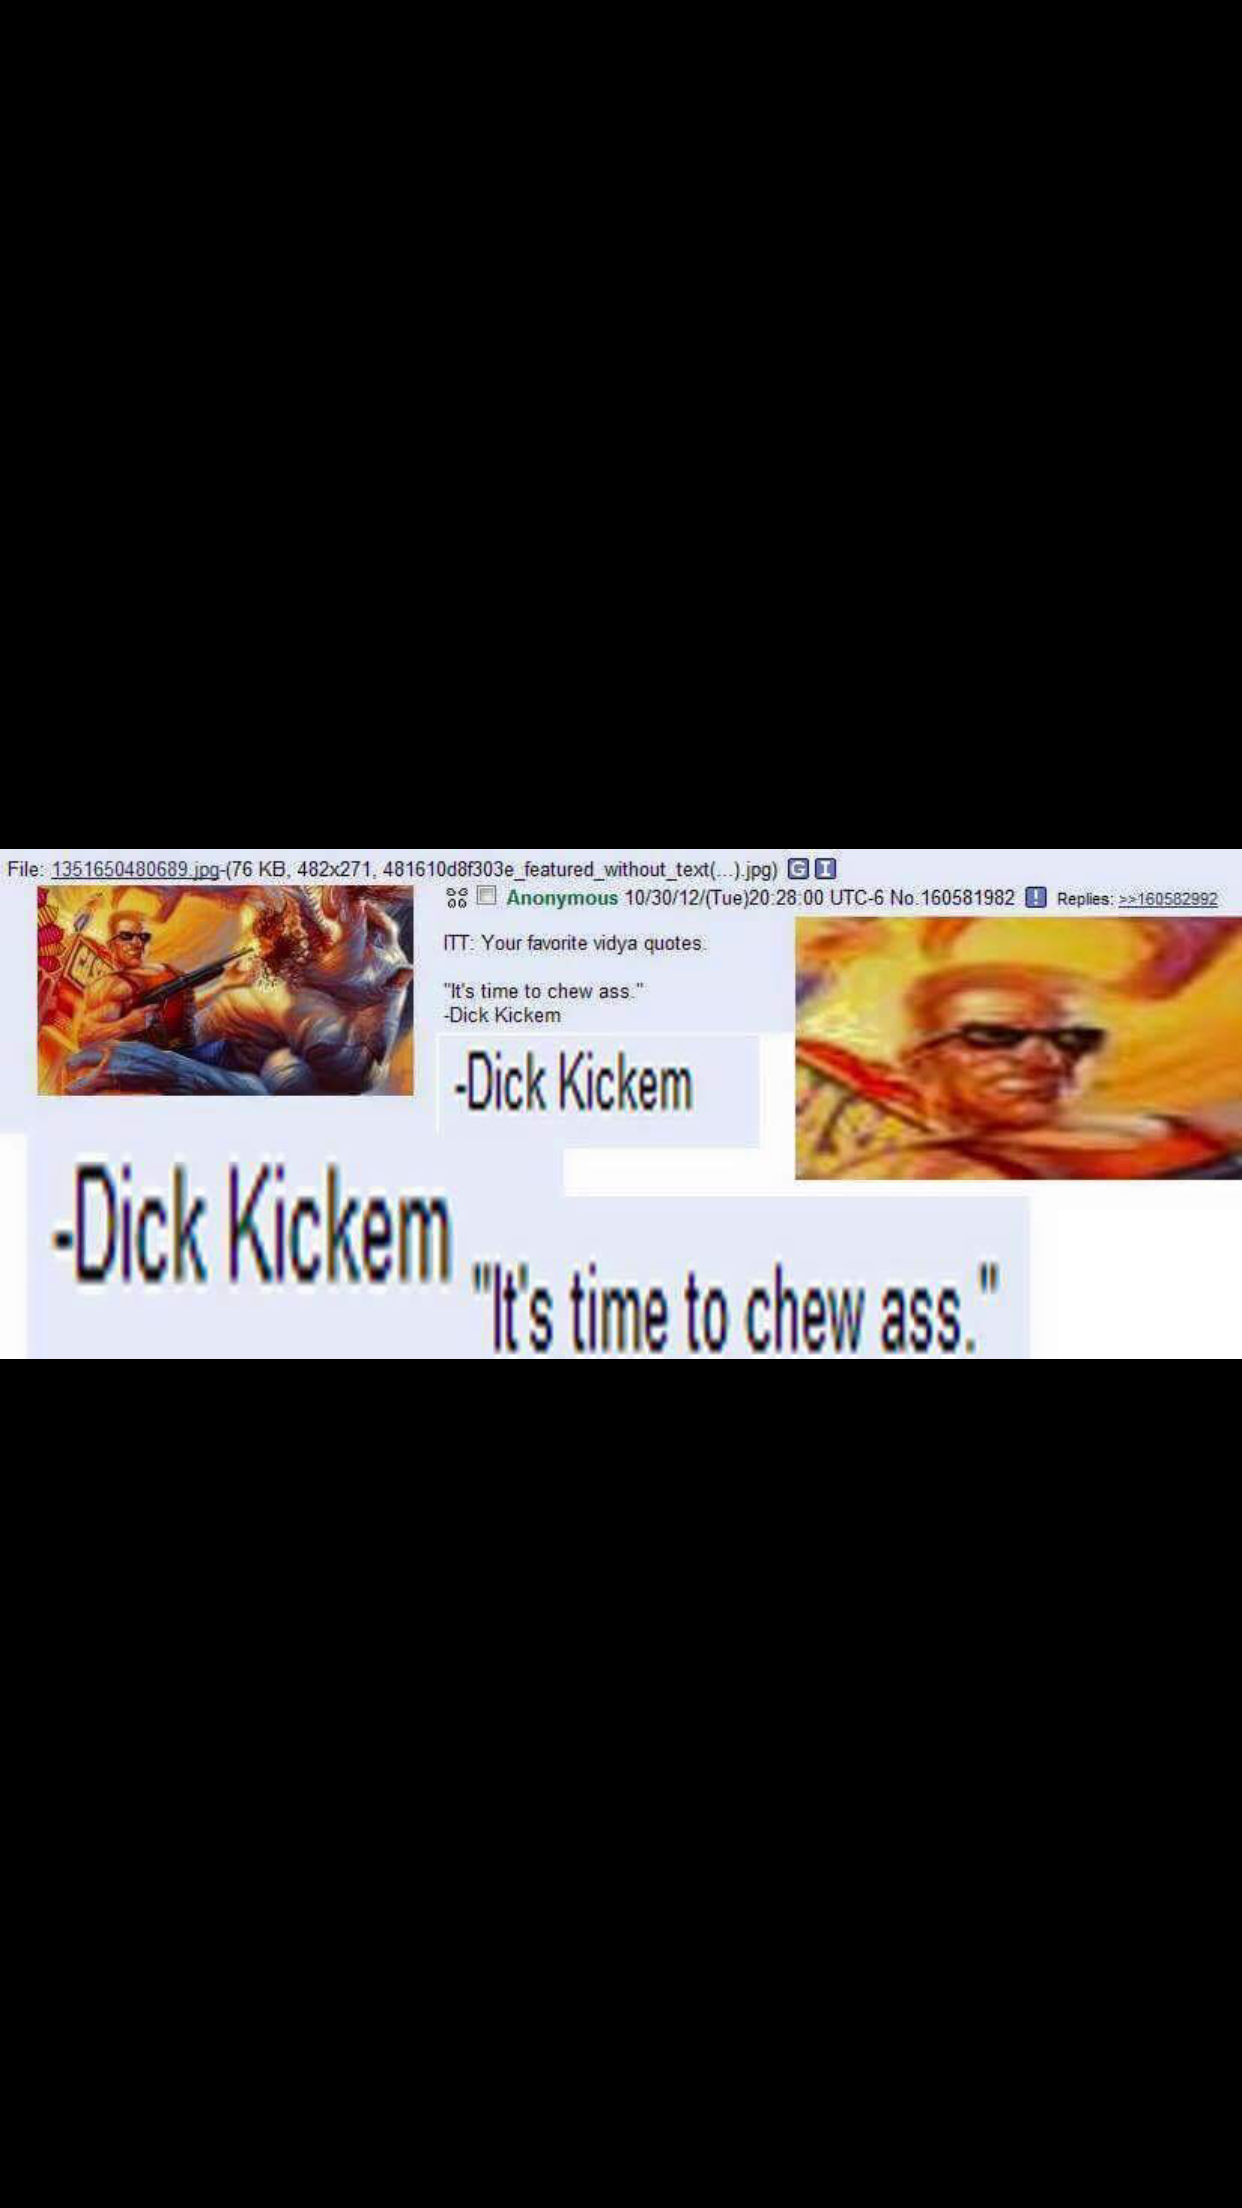 dick kickem - Dick Kickem "It's time to chew ass."